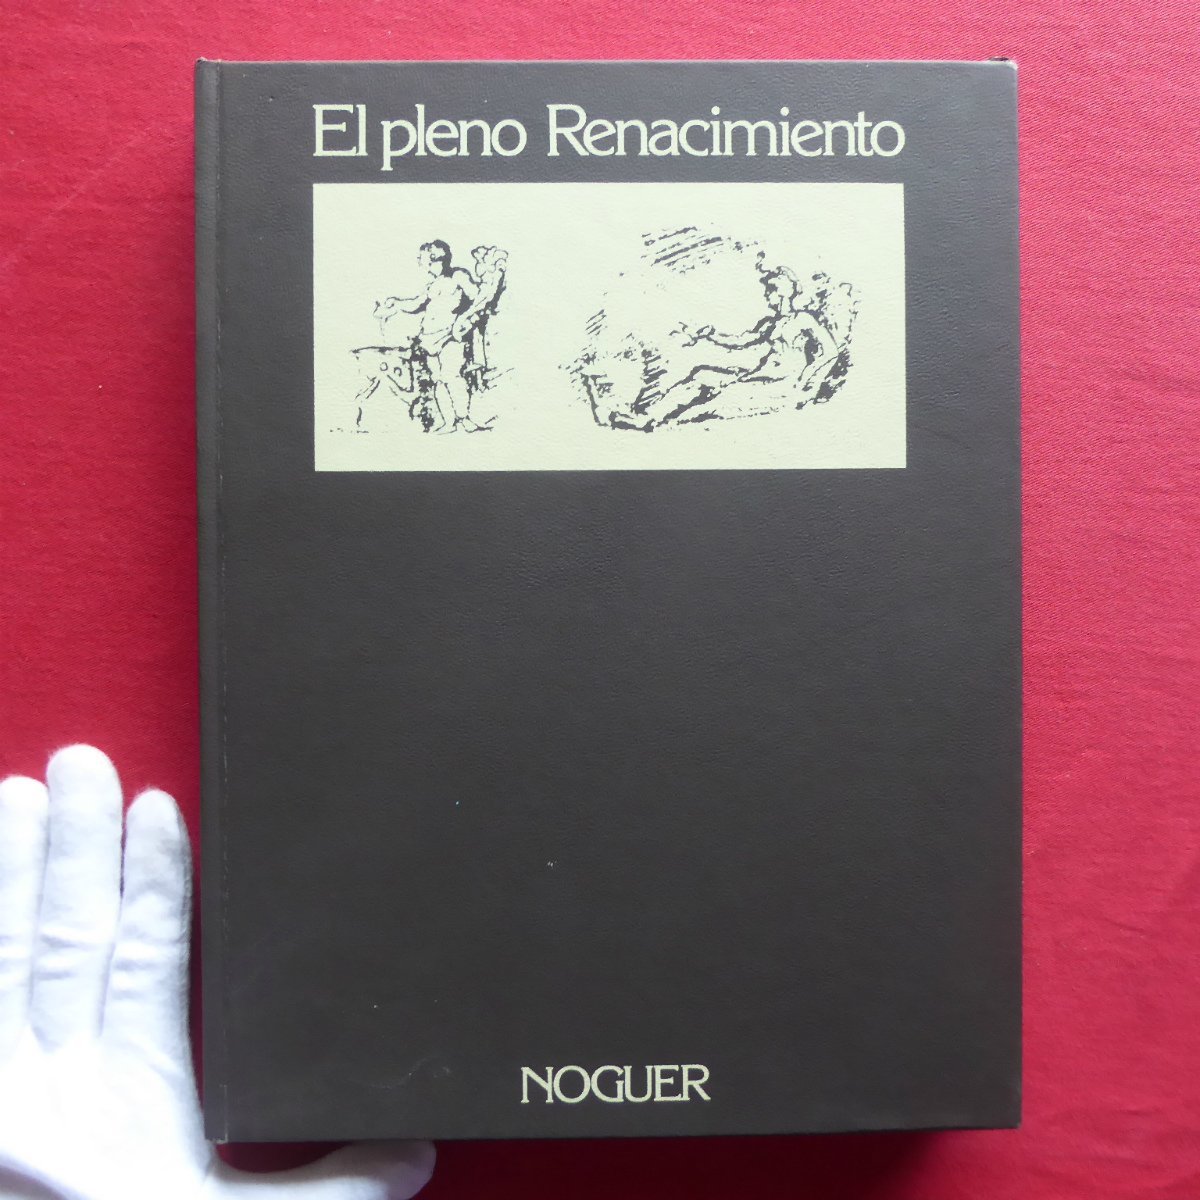 a2/洋書図録【完全な再生:El pleno Renacimiento/NOGUER･1981年】ミケランジェロ/ティントレット/レオナルド/ラファエロ, 人文, 社会, 宗教, キリスト教